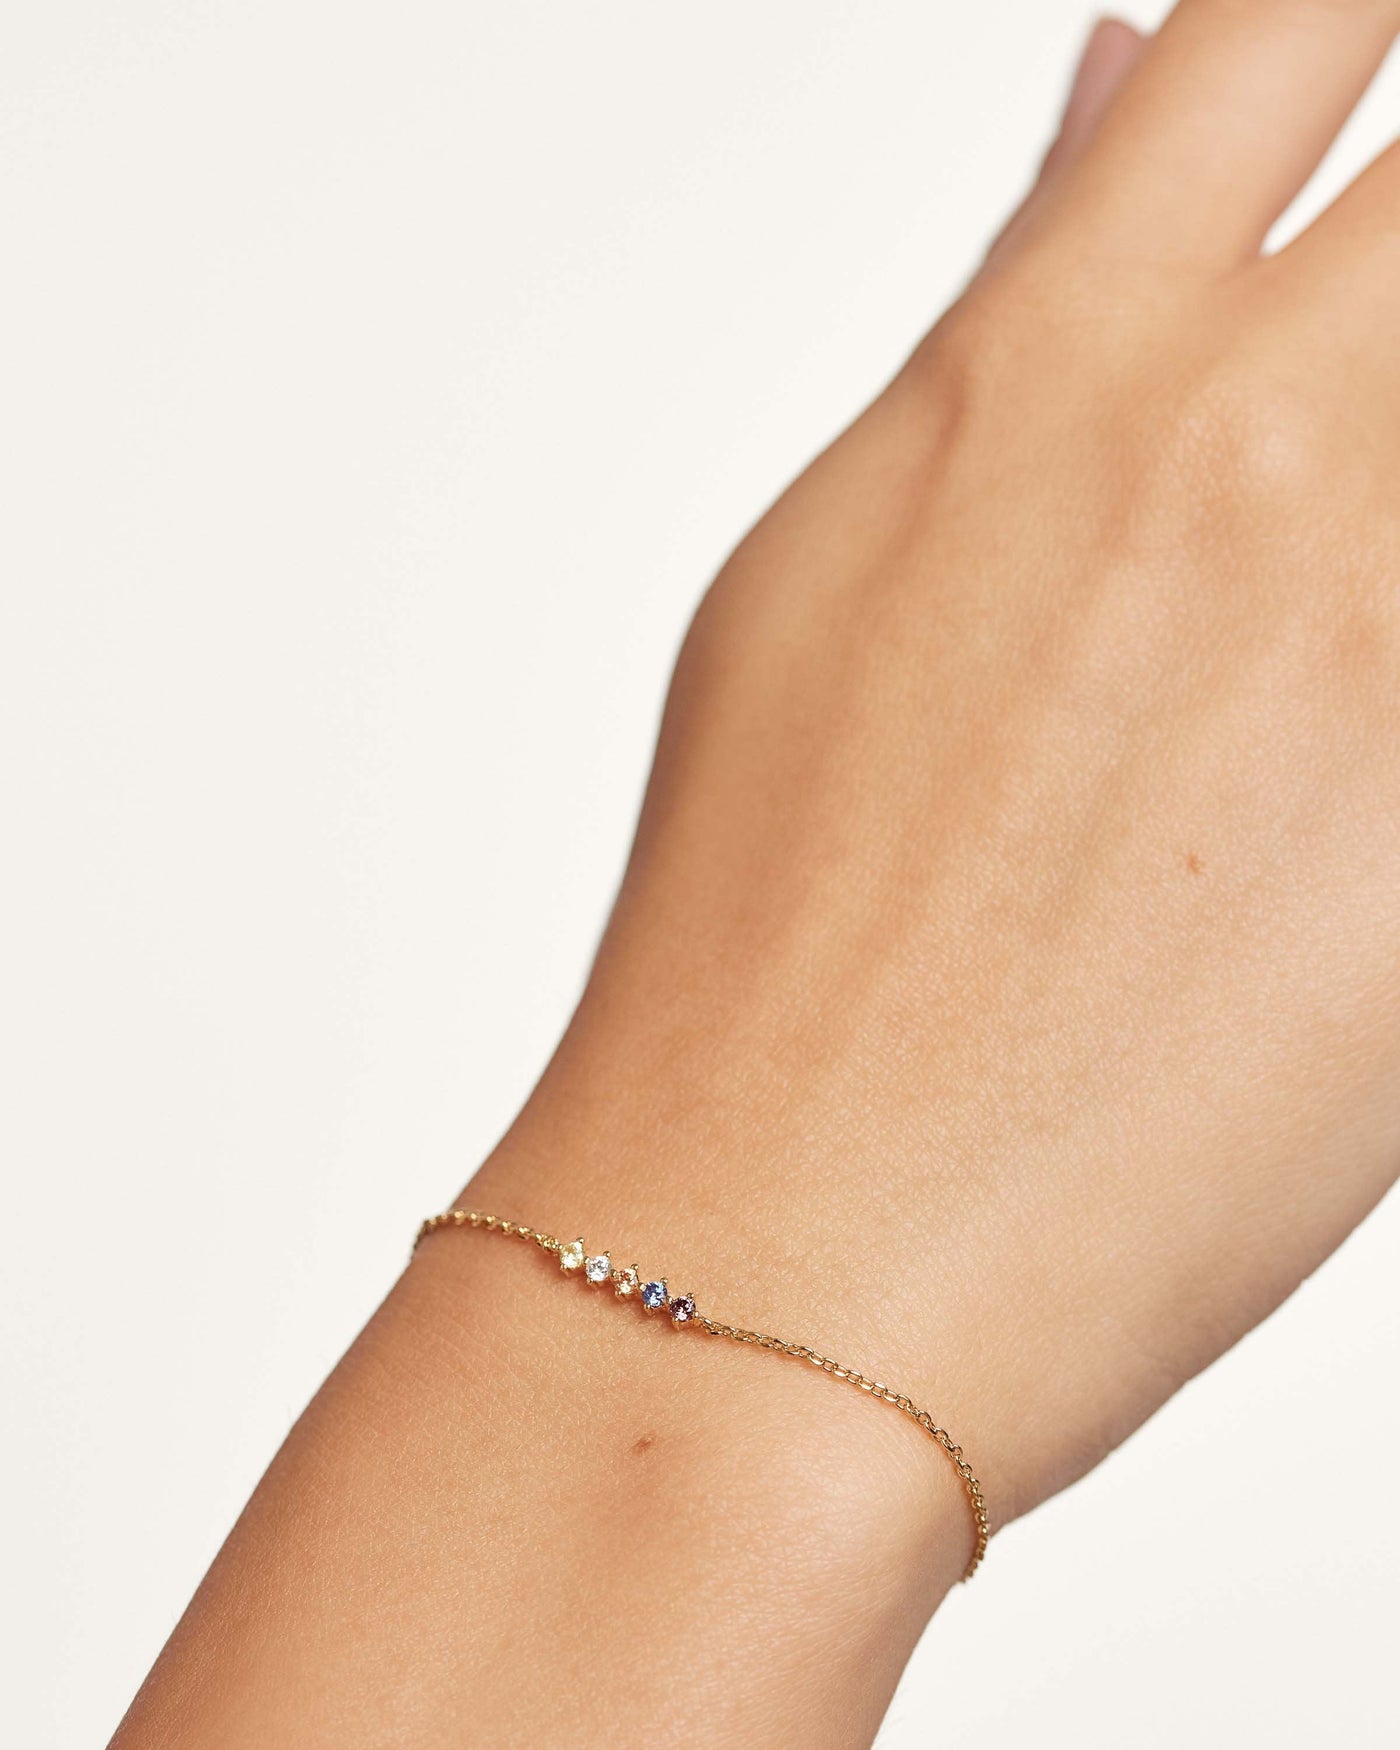 Opal & Crystal Dainty Bracelet Set with Extender Add On | Dainty bracelets,  Gold bracelet chain, Opal crystal